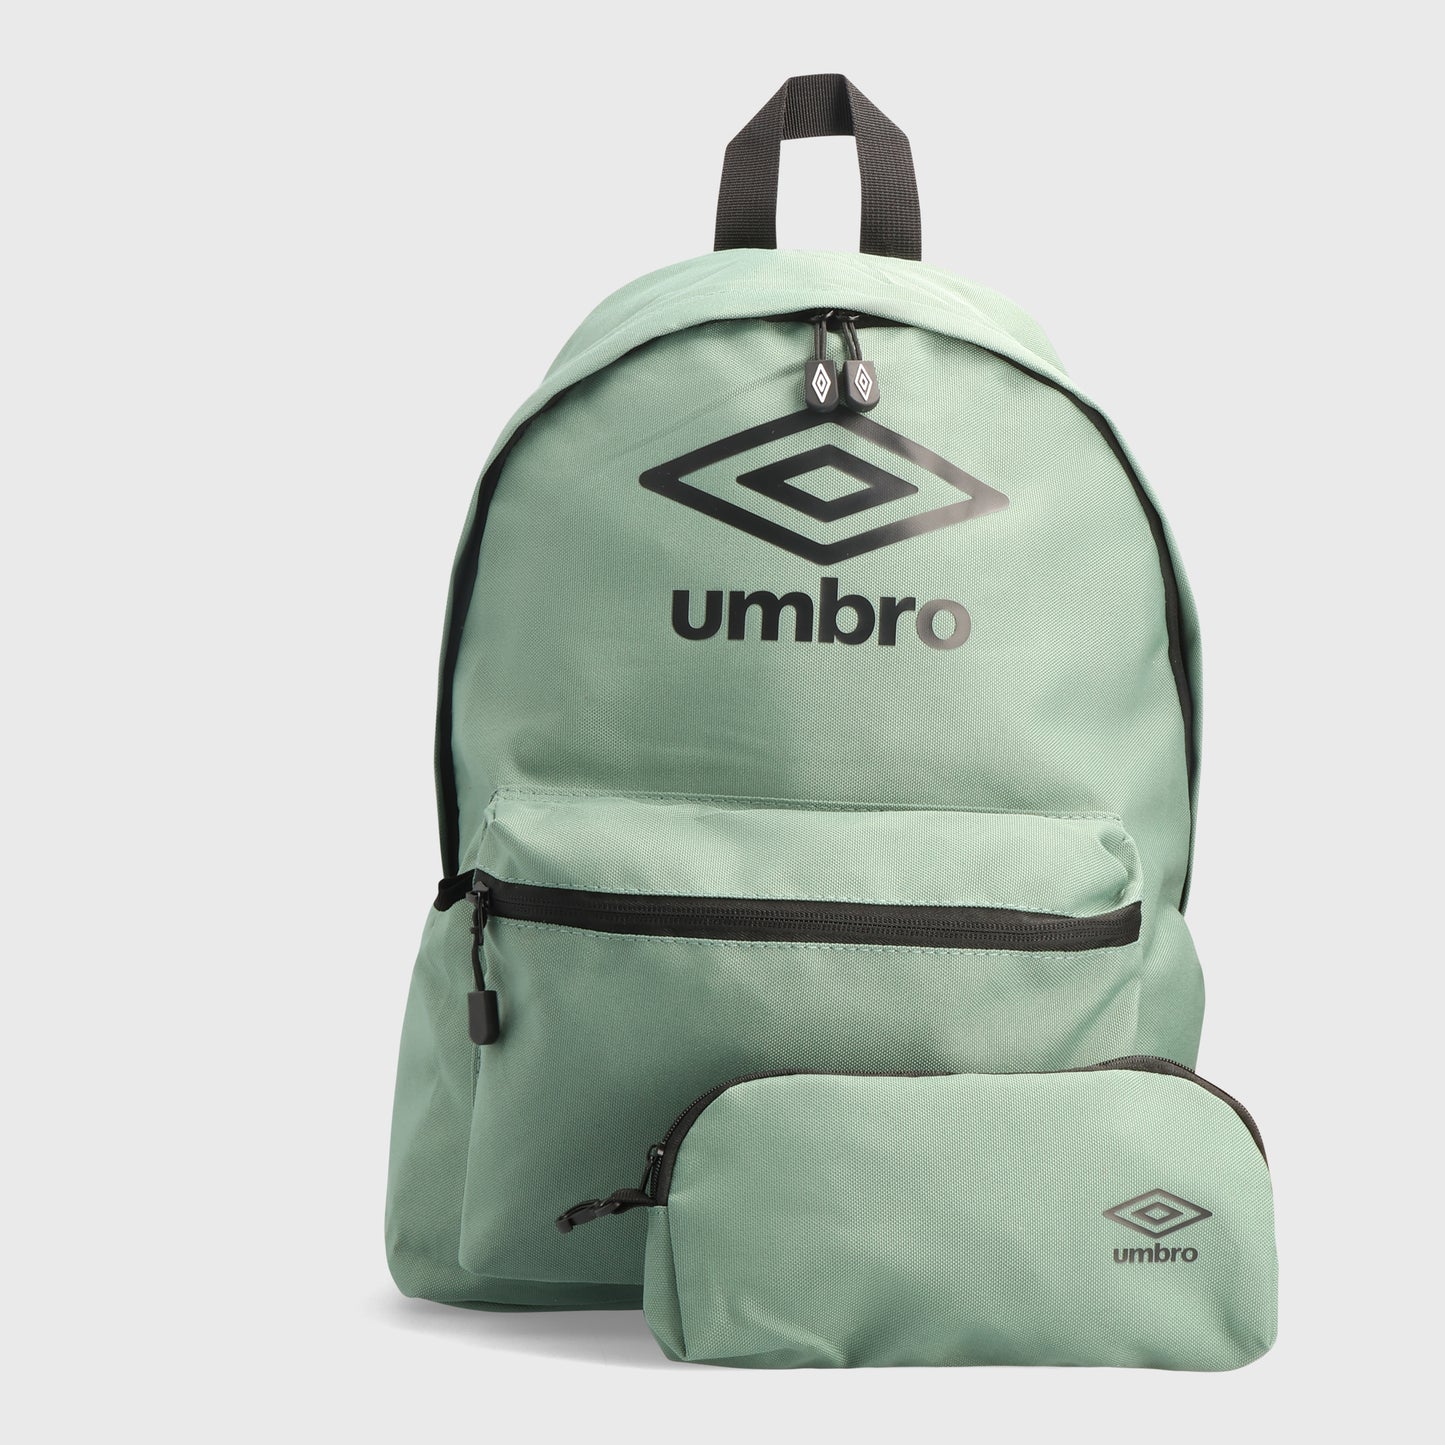 Umbro Back To School Backpack Set Green/Black _ 181151 _ Green